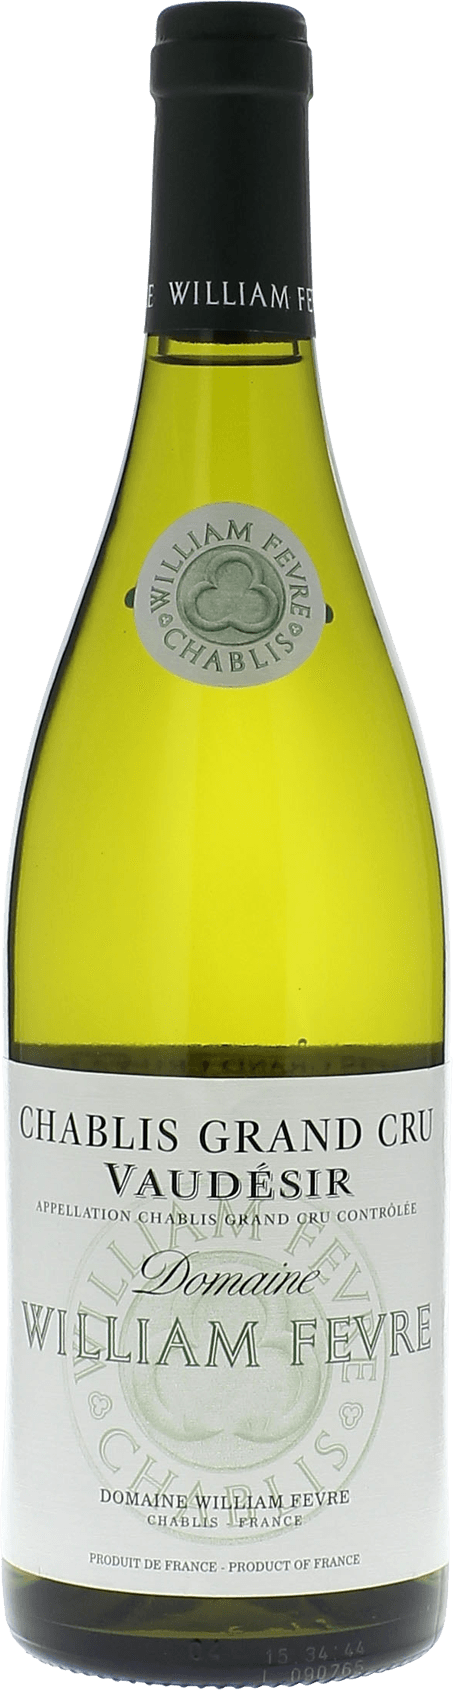 Chablis grand cru vaudsir 2018 Domaine FEVRE William, Bourgogne blanc